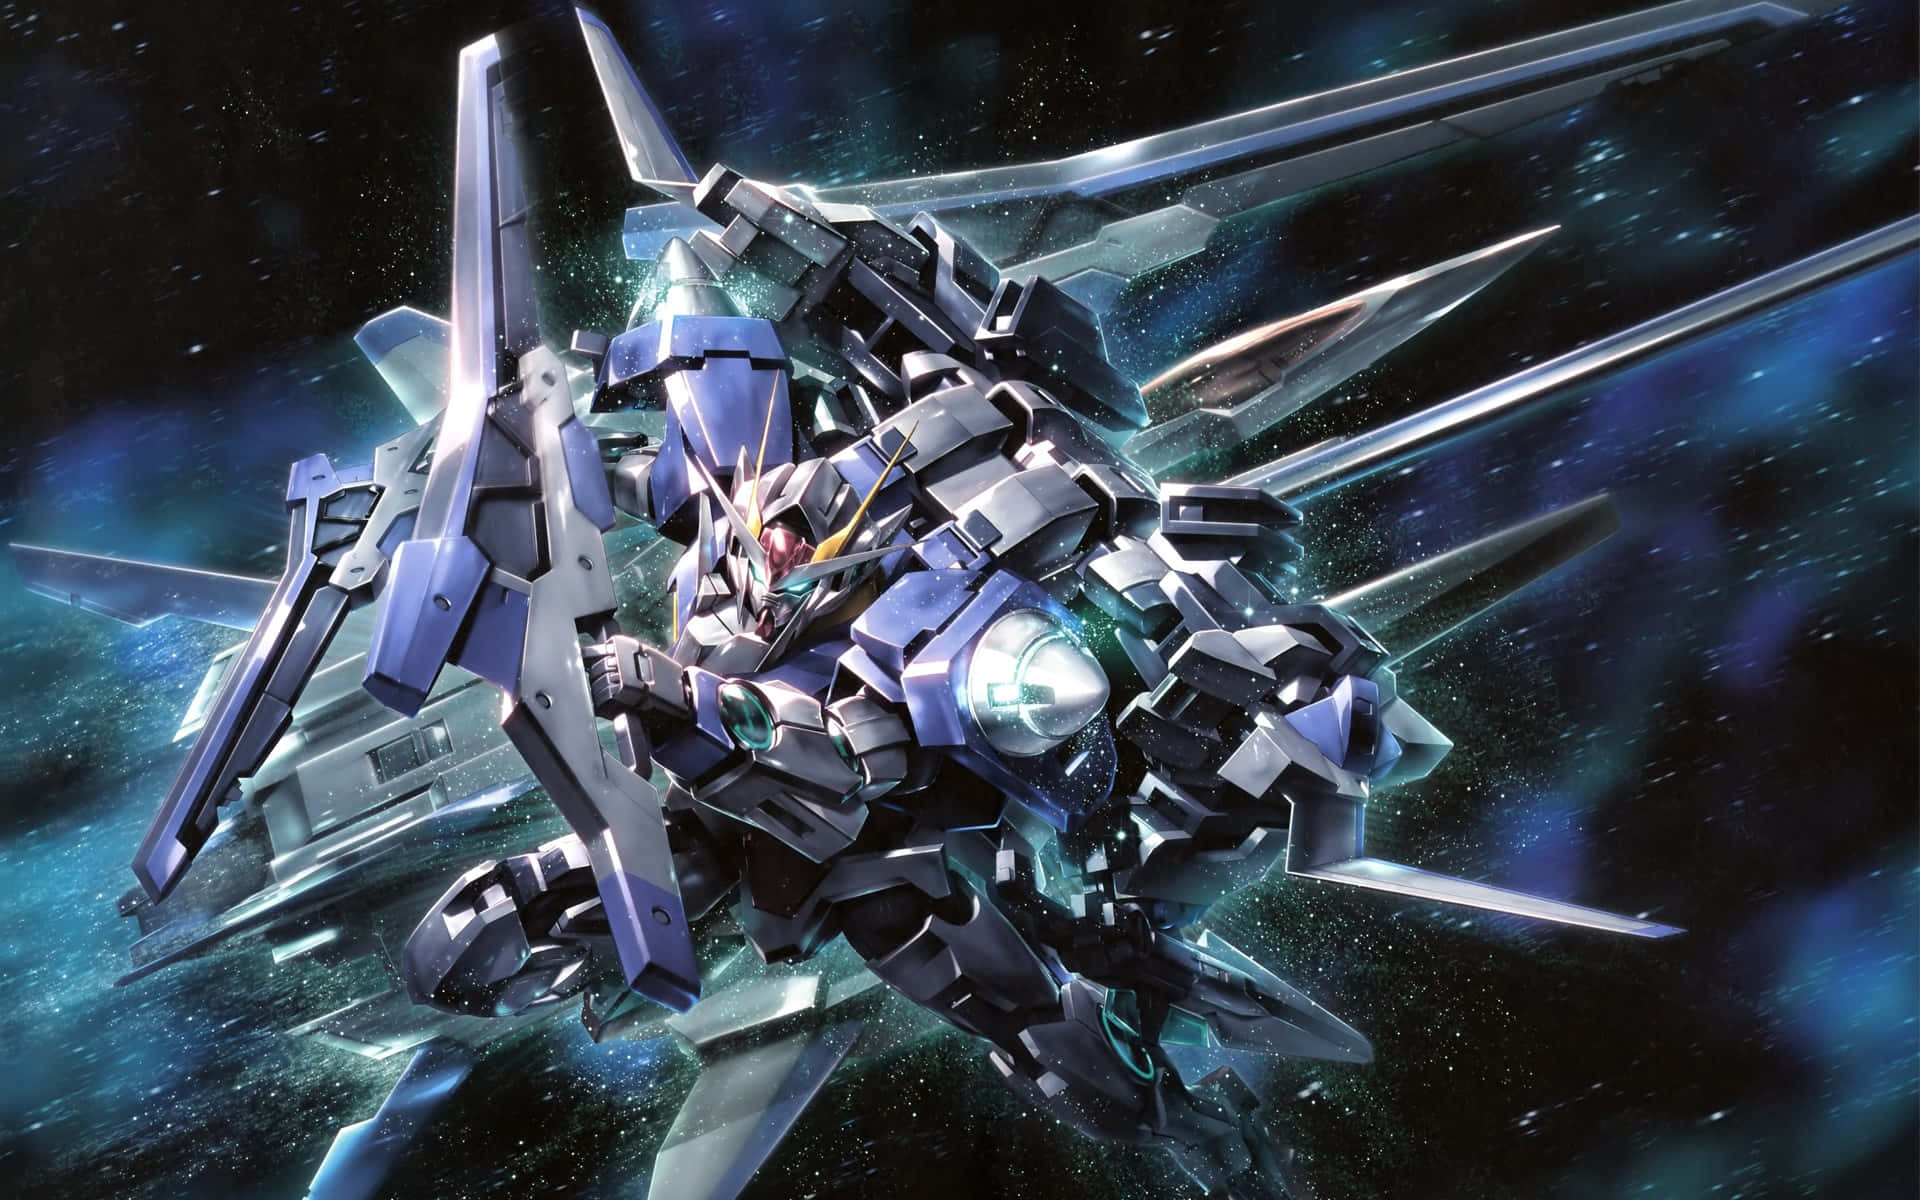 "The Mark III Gundam"